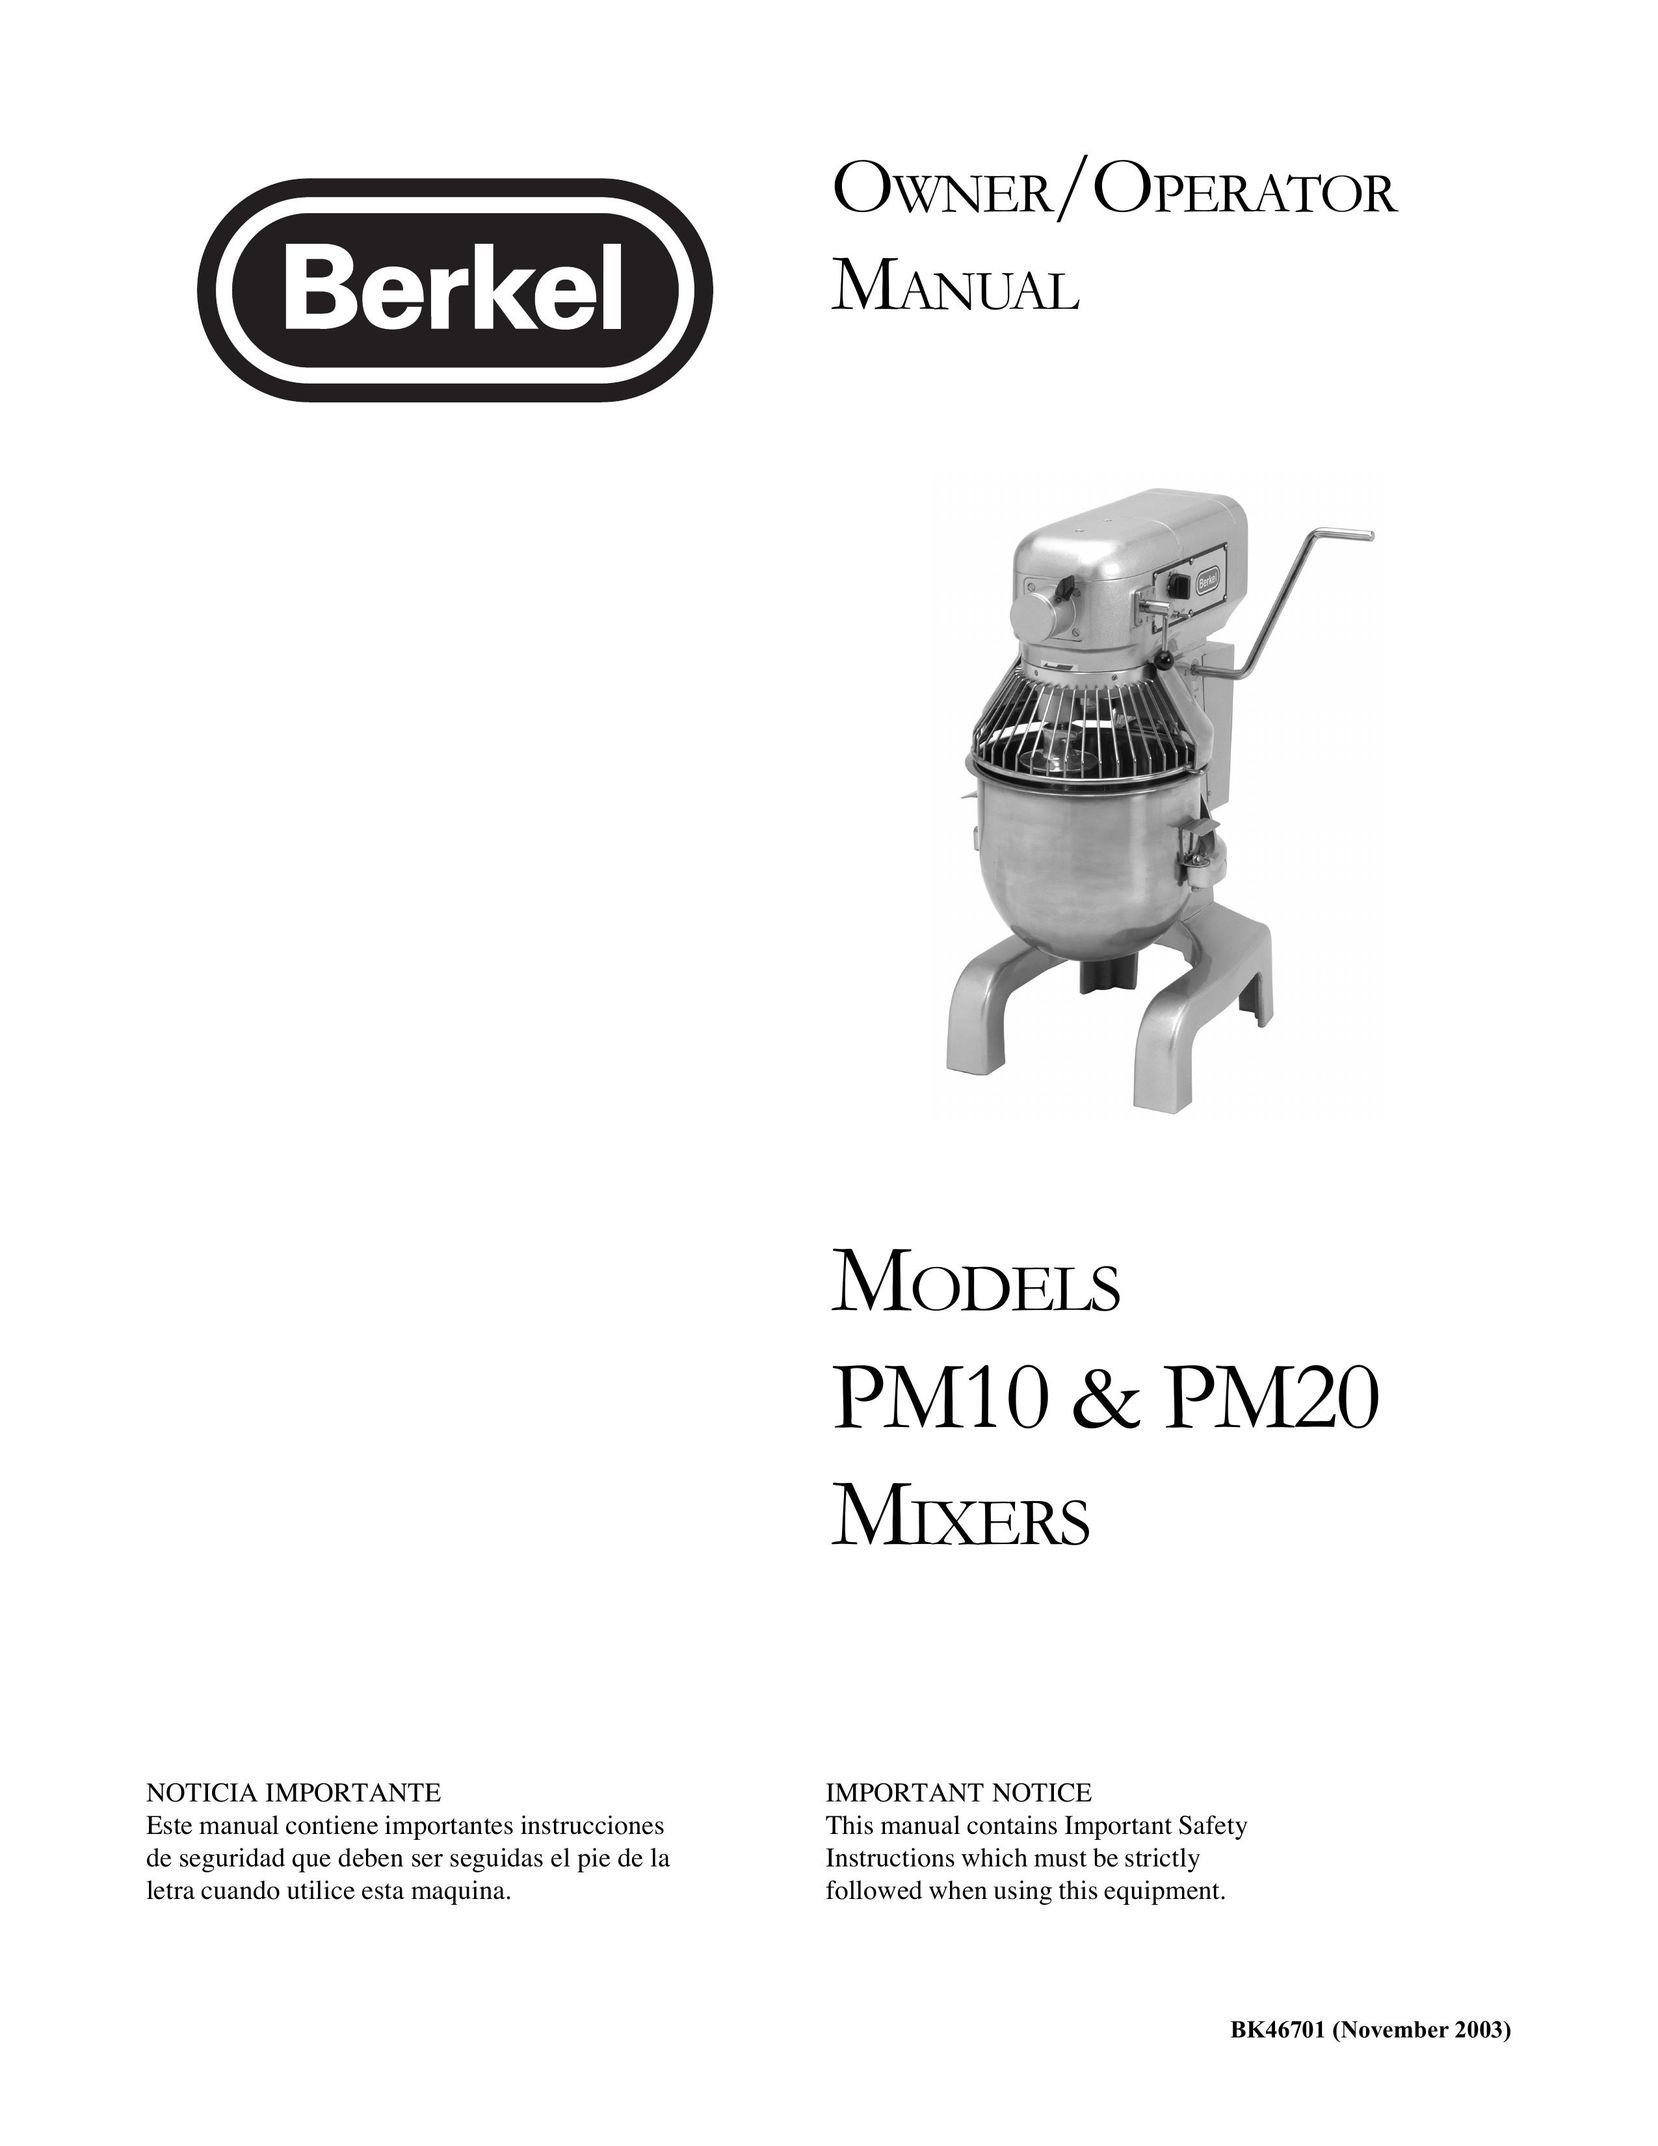 Berkel PM20 Mixer User Manual